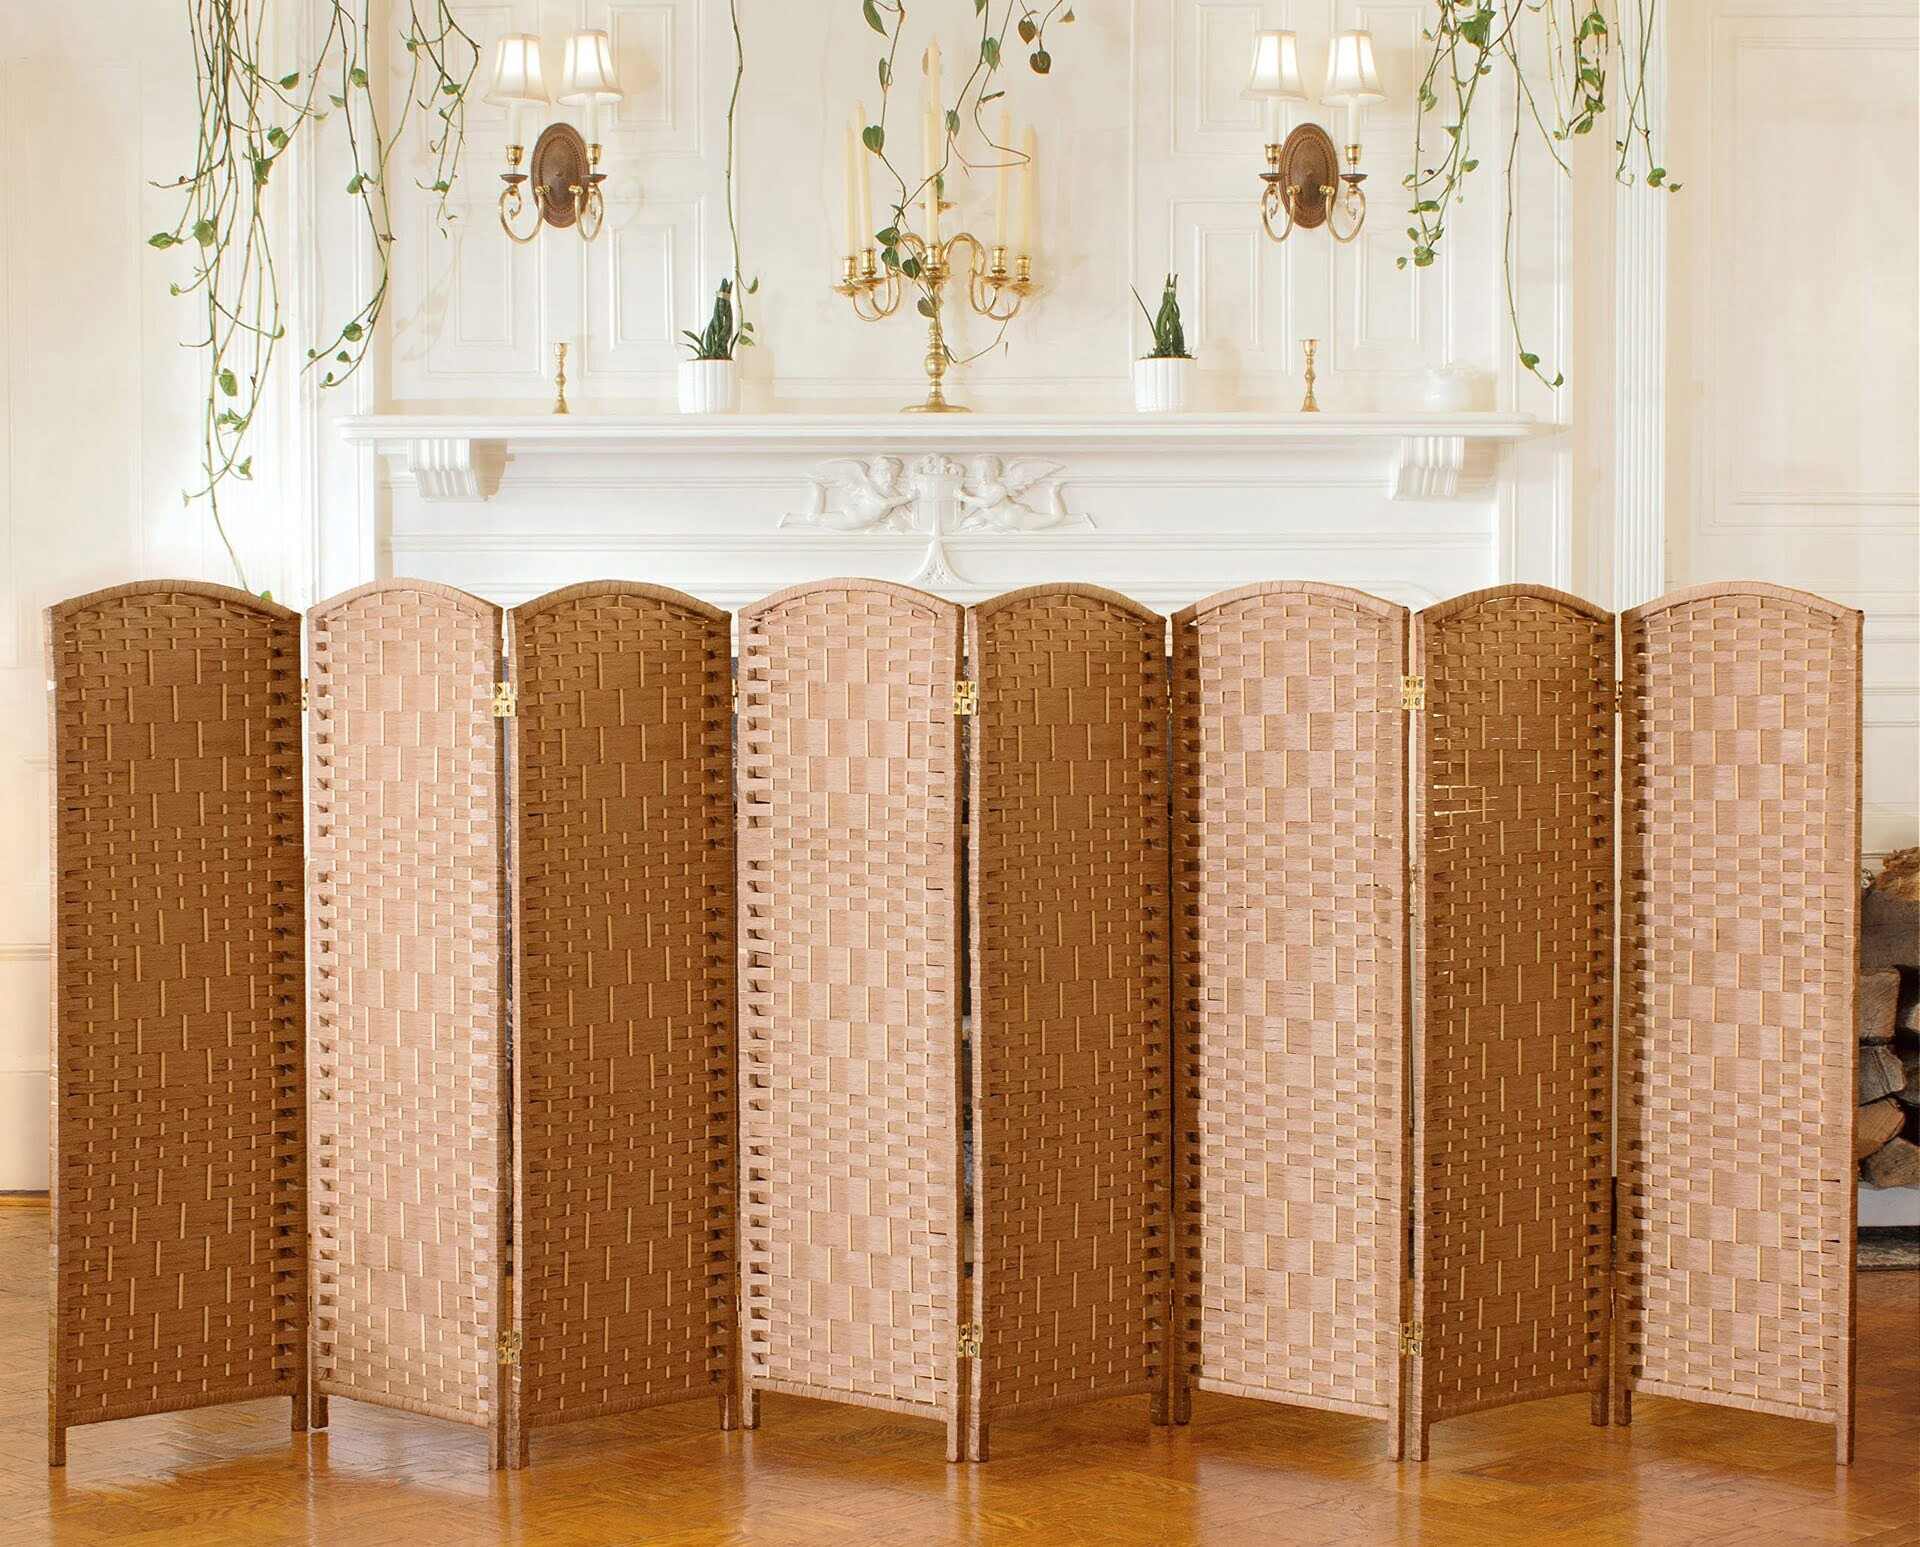 Oriental Furniture 6 ft. Tall Brown Cardboard Room Divider - 5 Panel